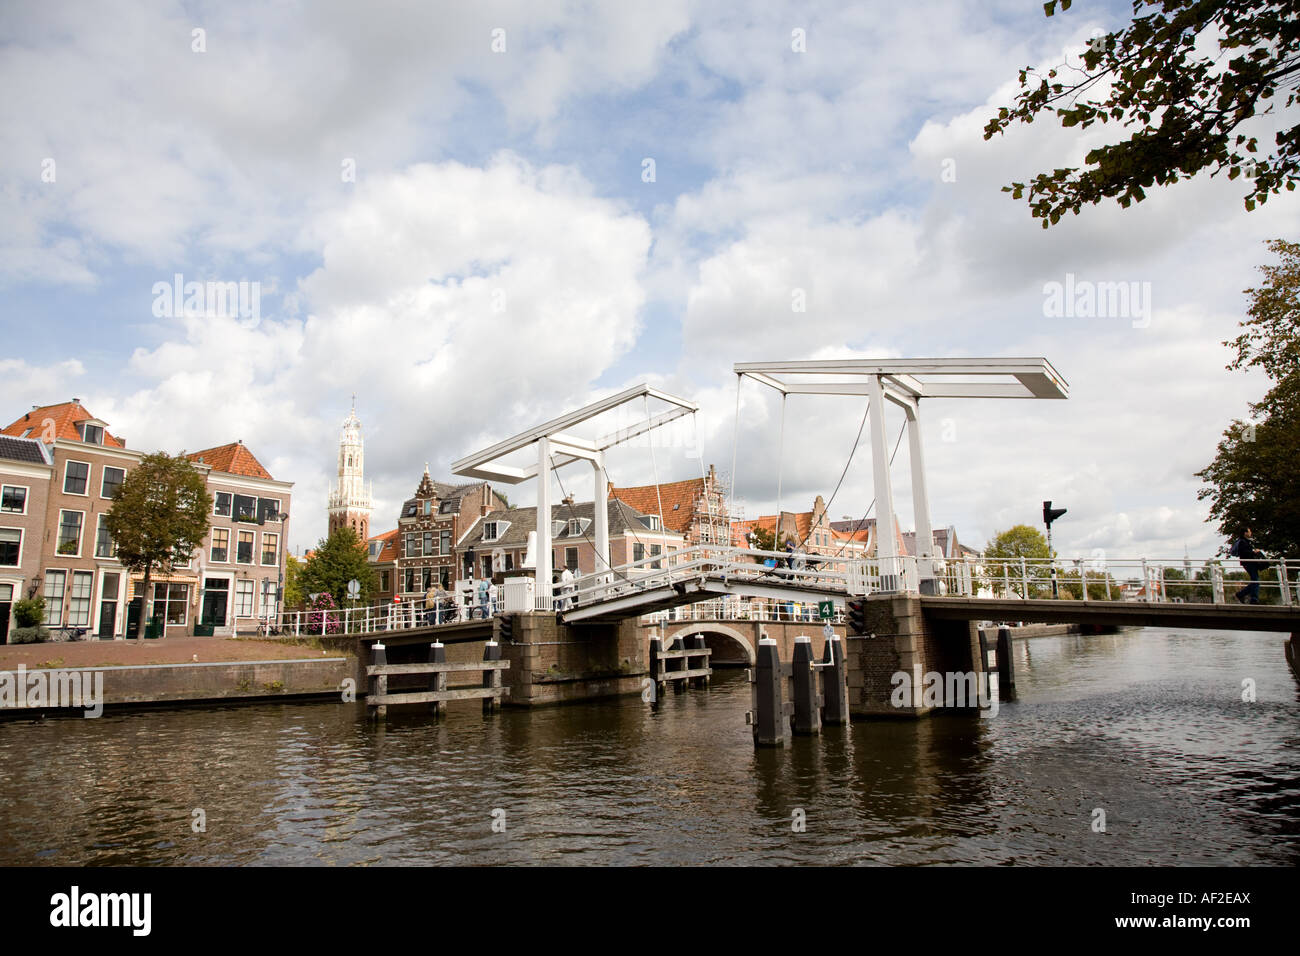 Douche Gravestenebrug, Bridge, Haarlem Stock Photo - Alamy